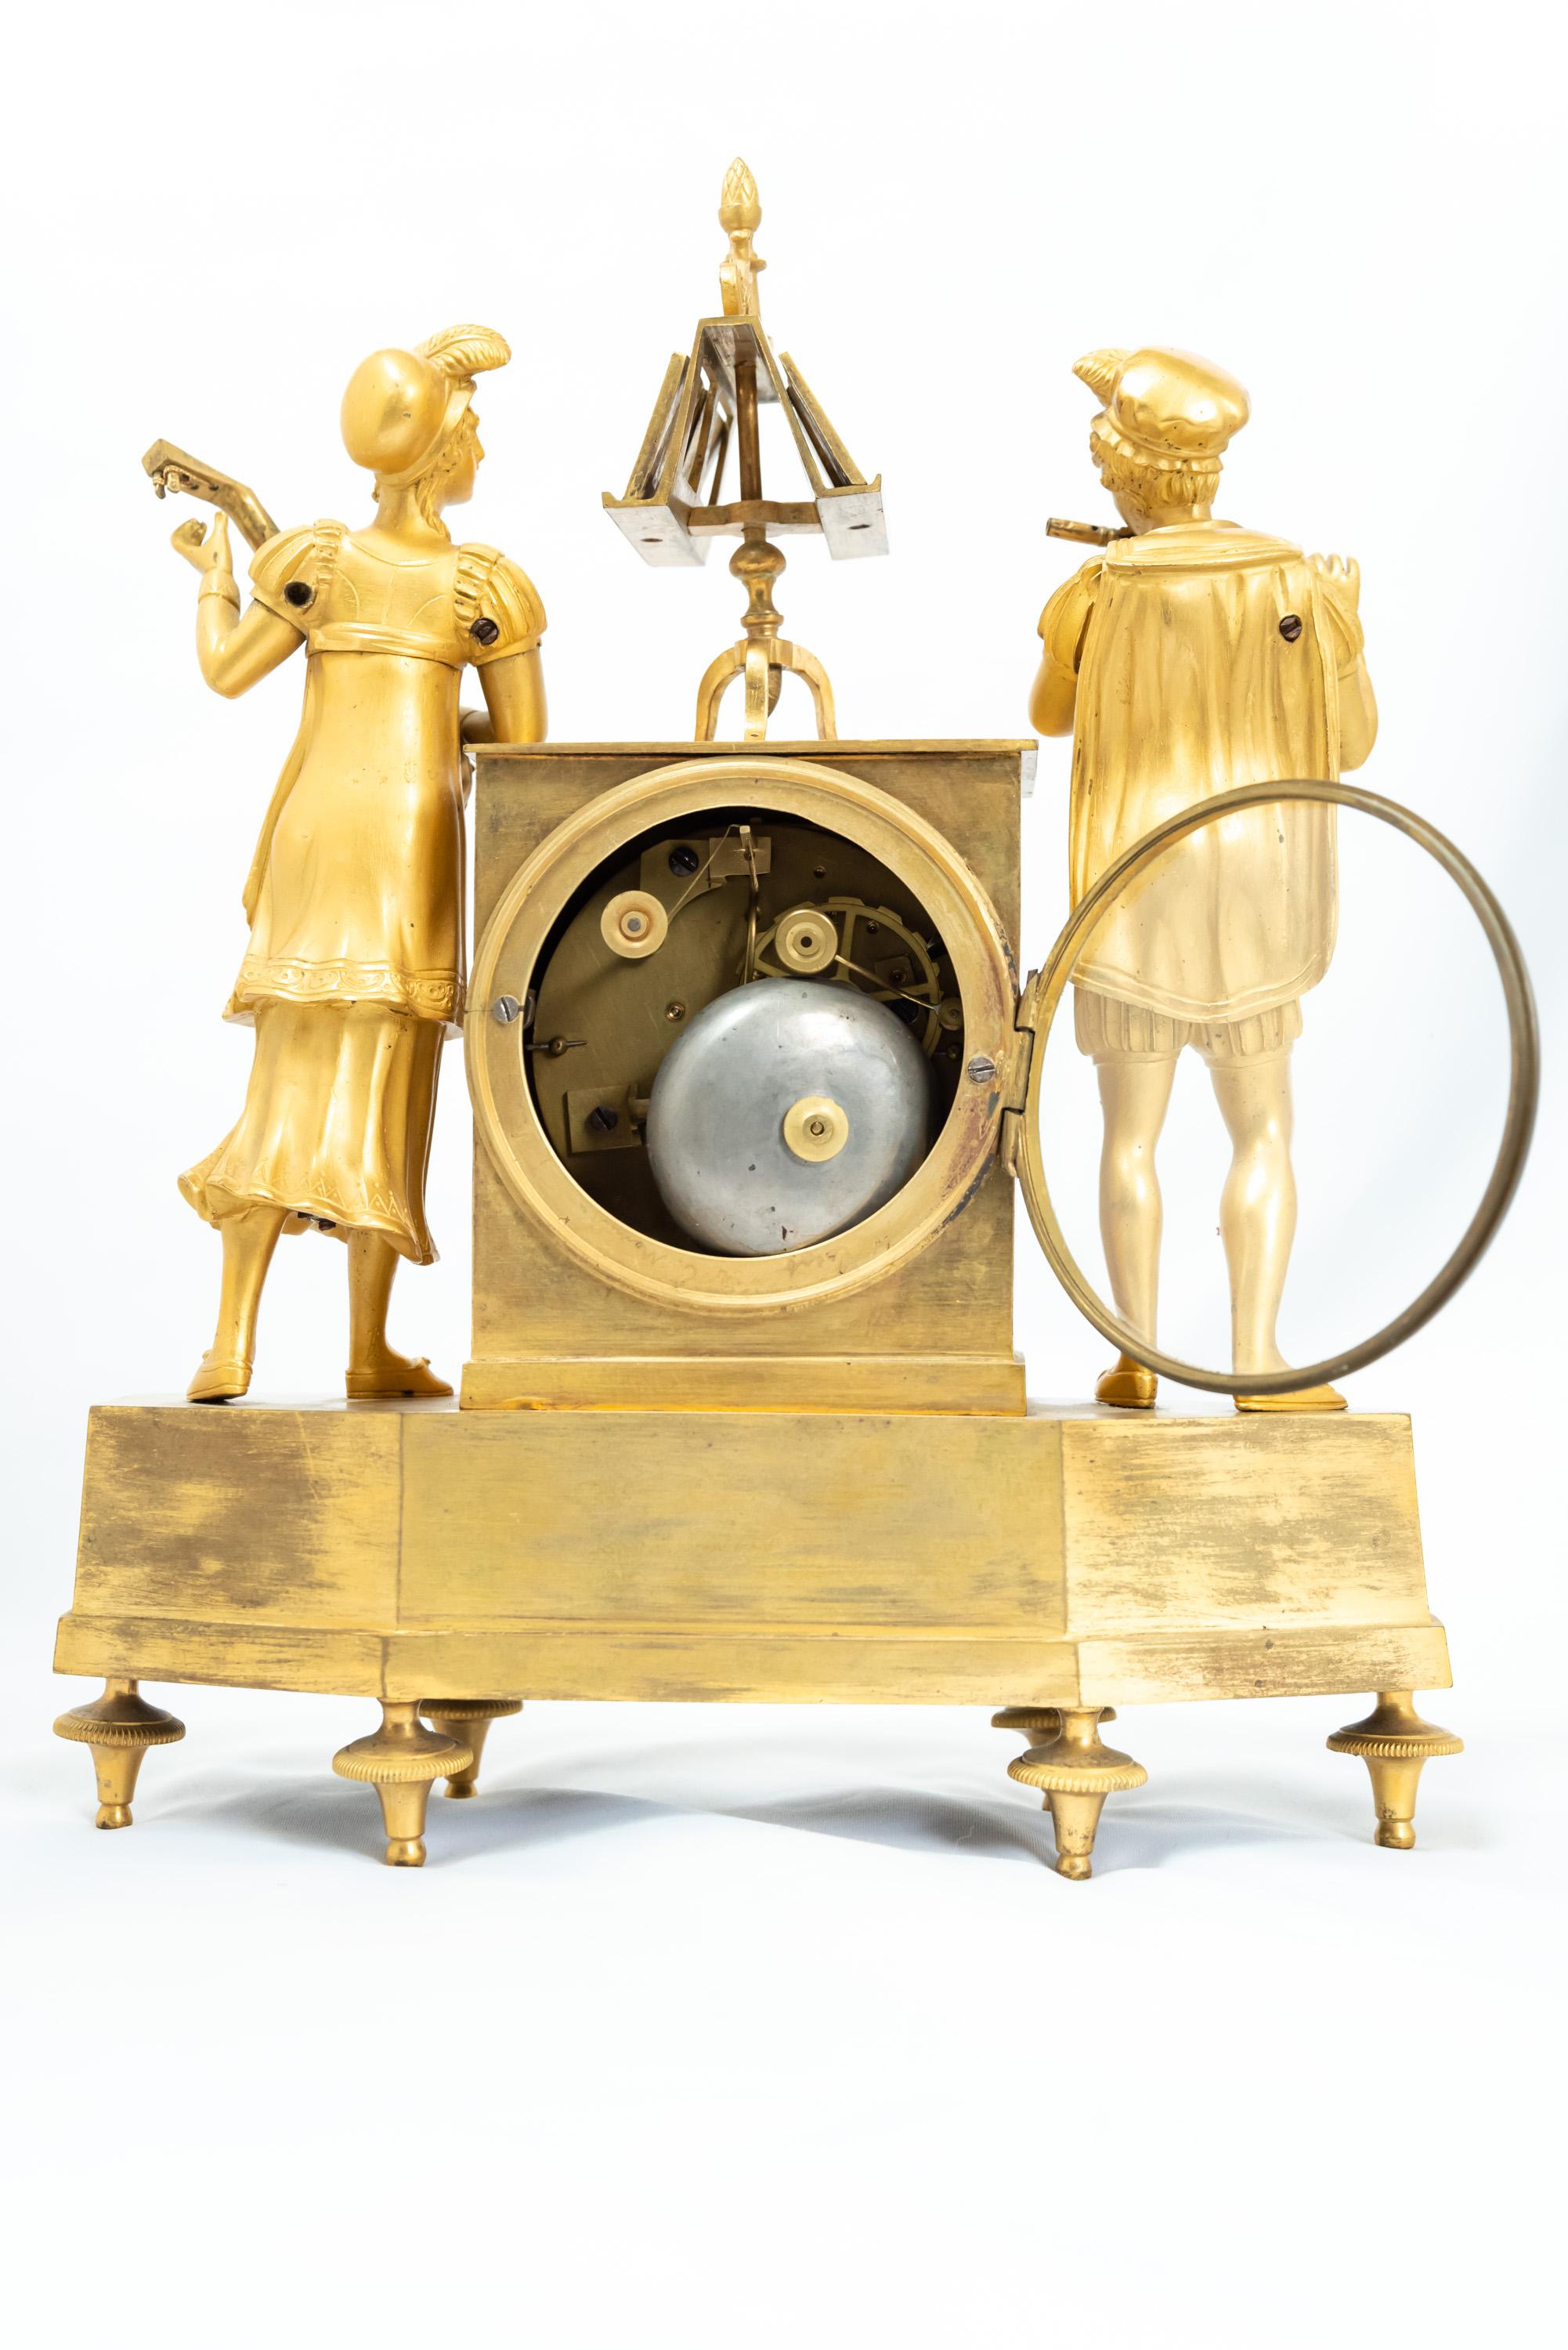 19th Century French Fire-Gilt Bronze Clock Depicting Troubadour Figures c. 1820 For Sale